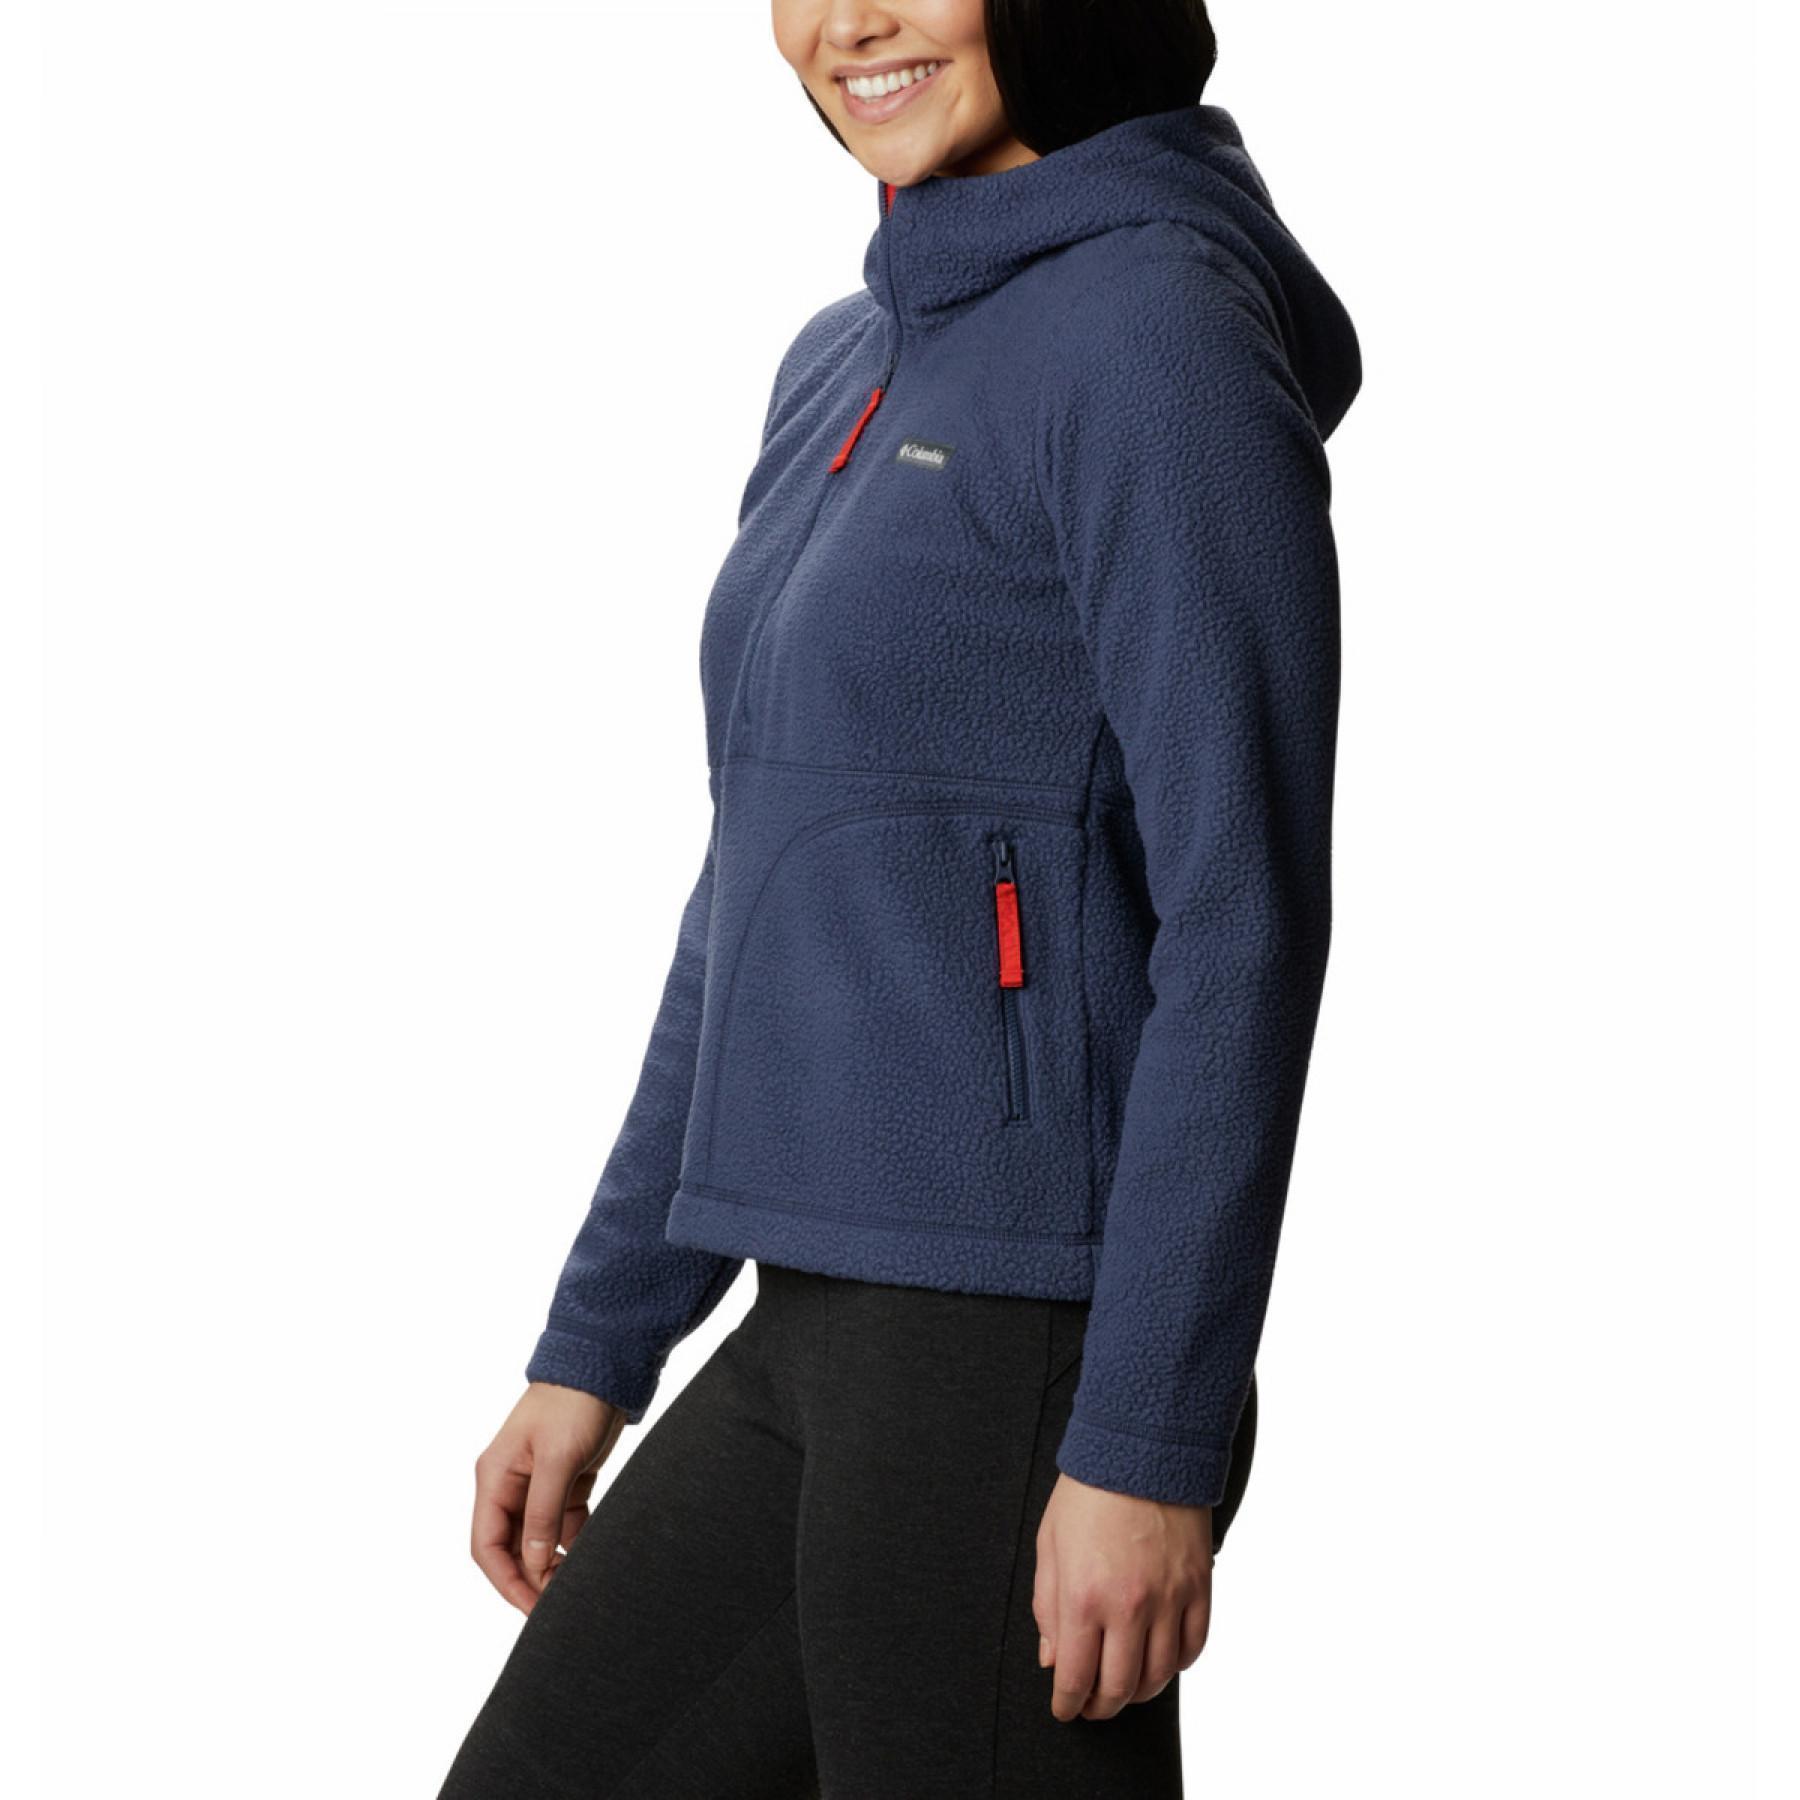 Women's 1/2 zip sweatshirt Columbia Northern Reach Sherpa